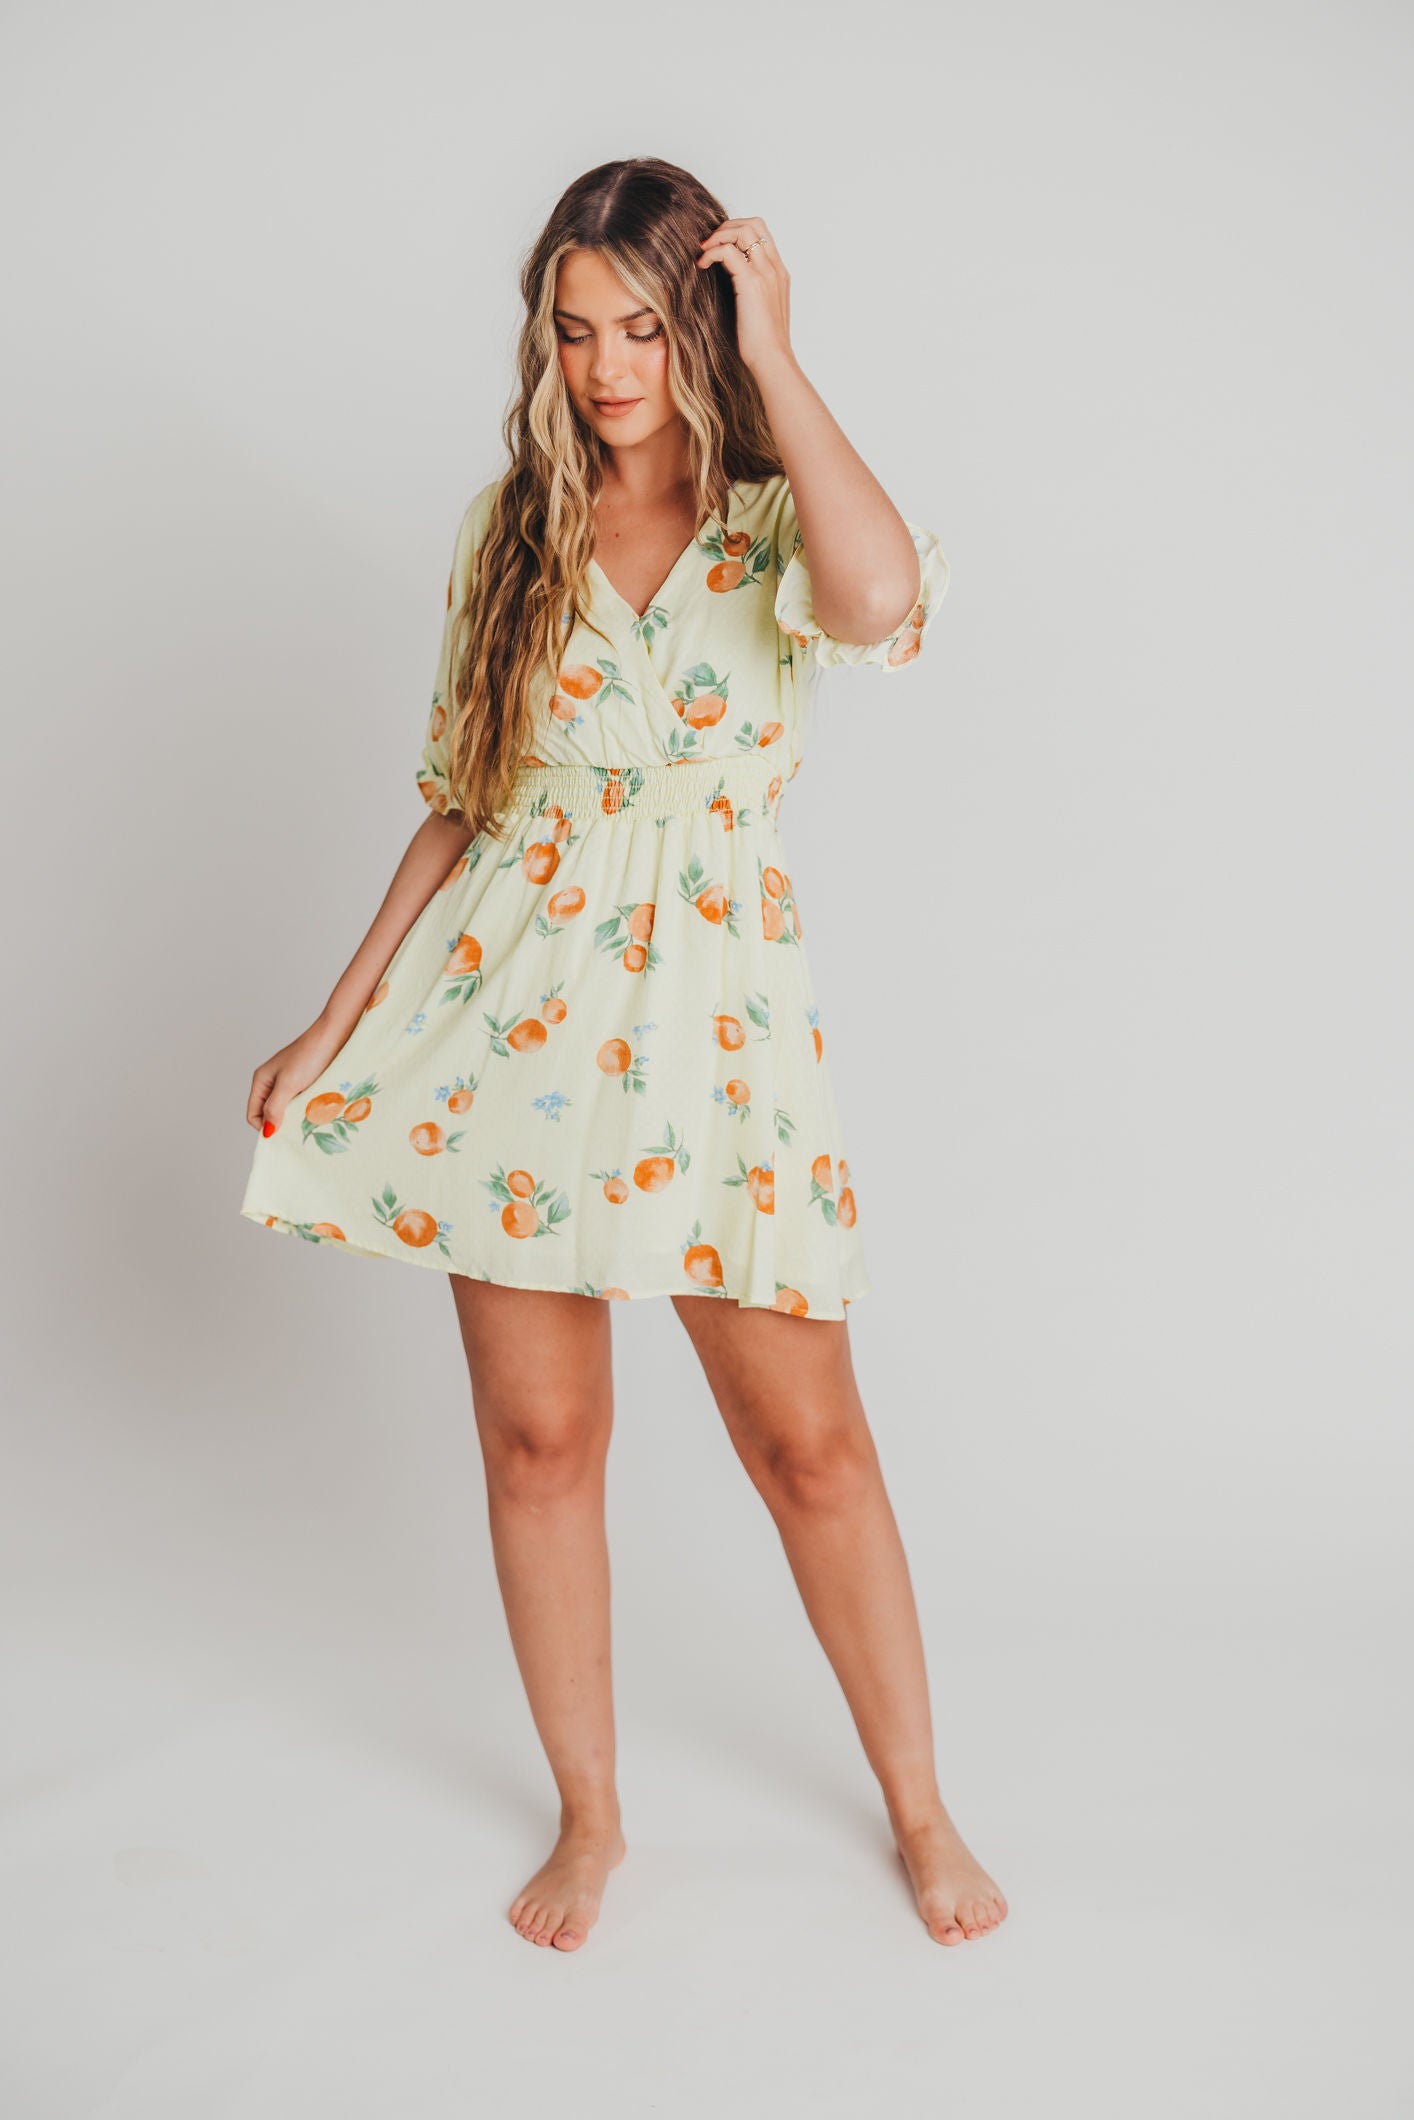 Celine Surplice Mini Dress in Lemon